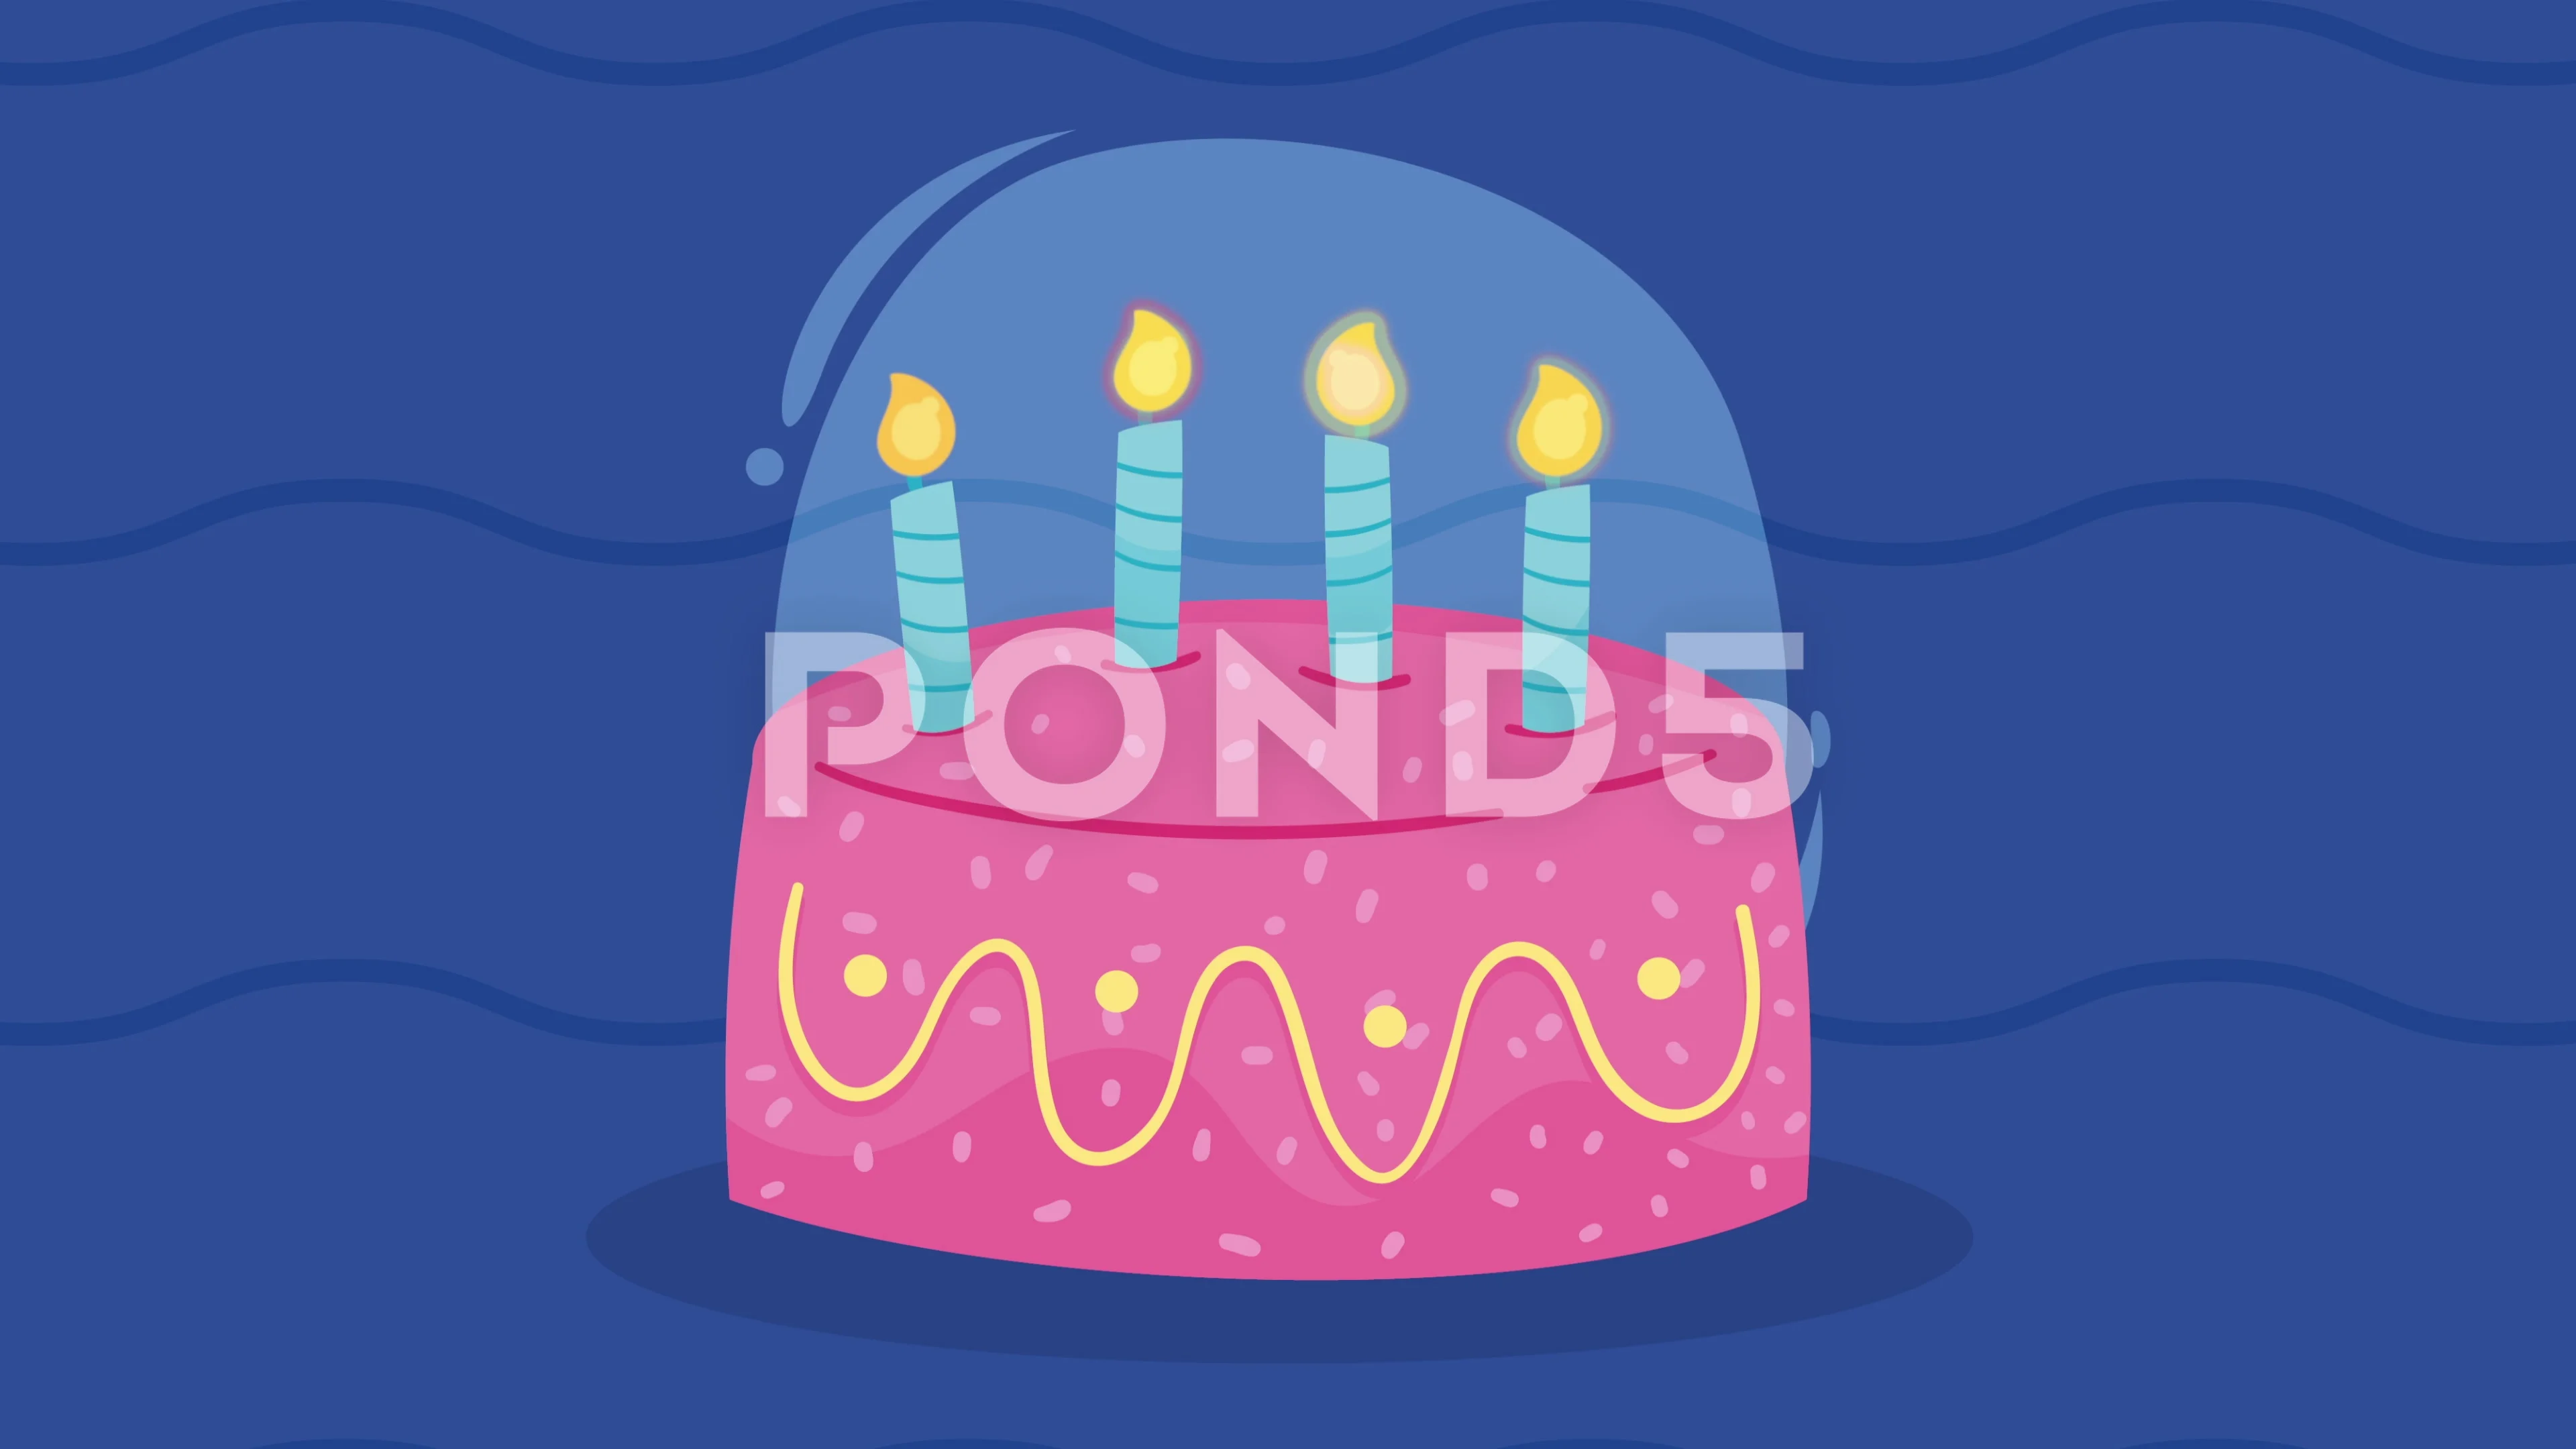 Animated Birthday Cake Candles GIFs | Tenor